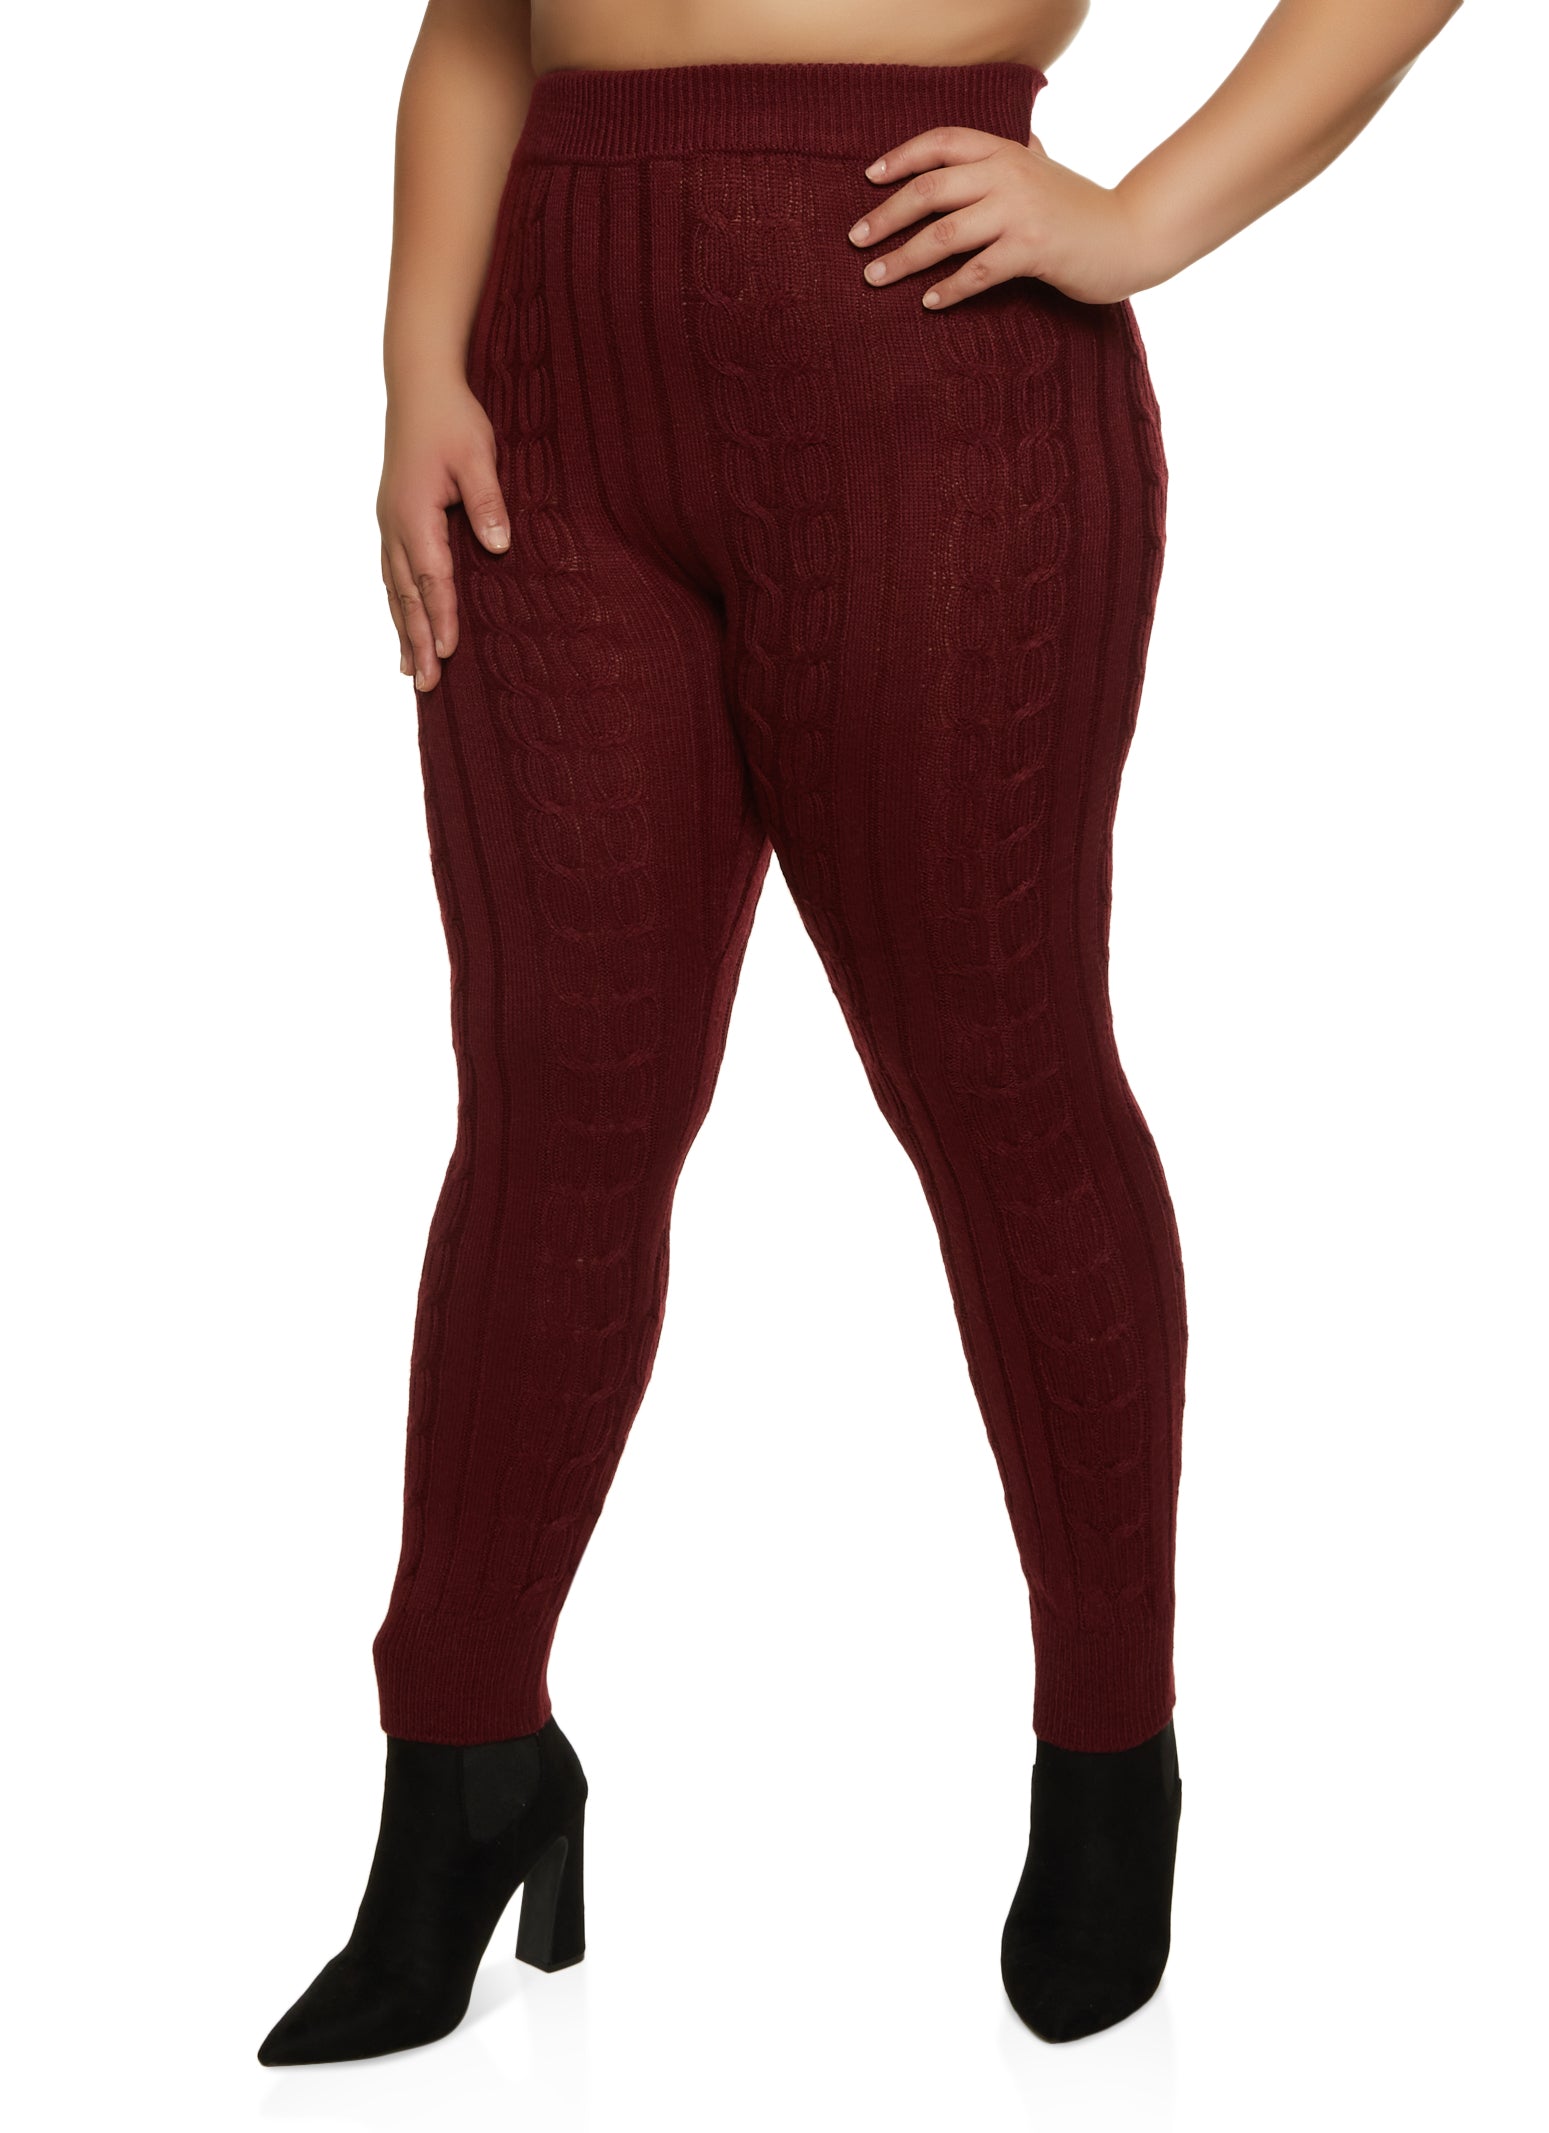 Plus Size Burgundy Red Cord Leggings  Plus size leggings, Chunky knit  jumper, Stretch leggings